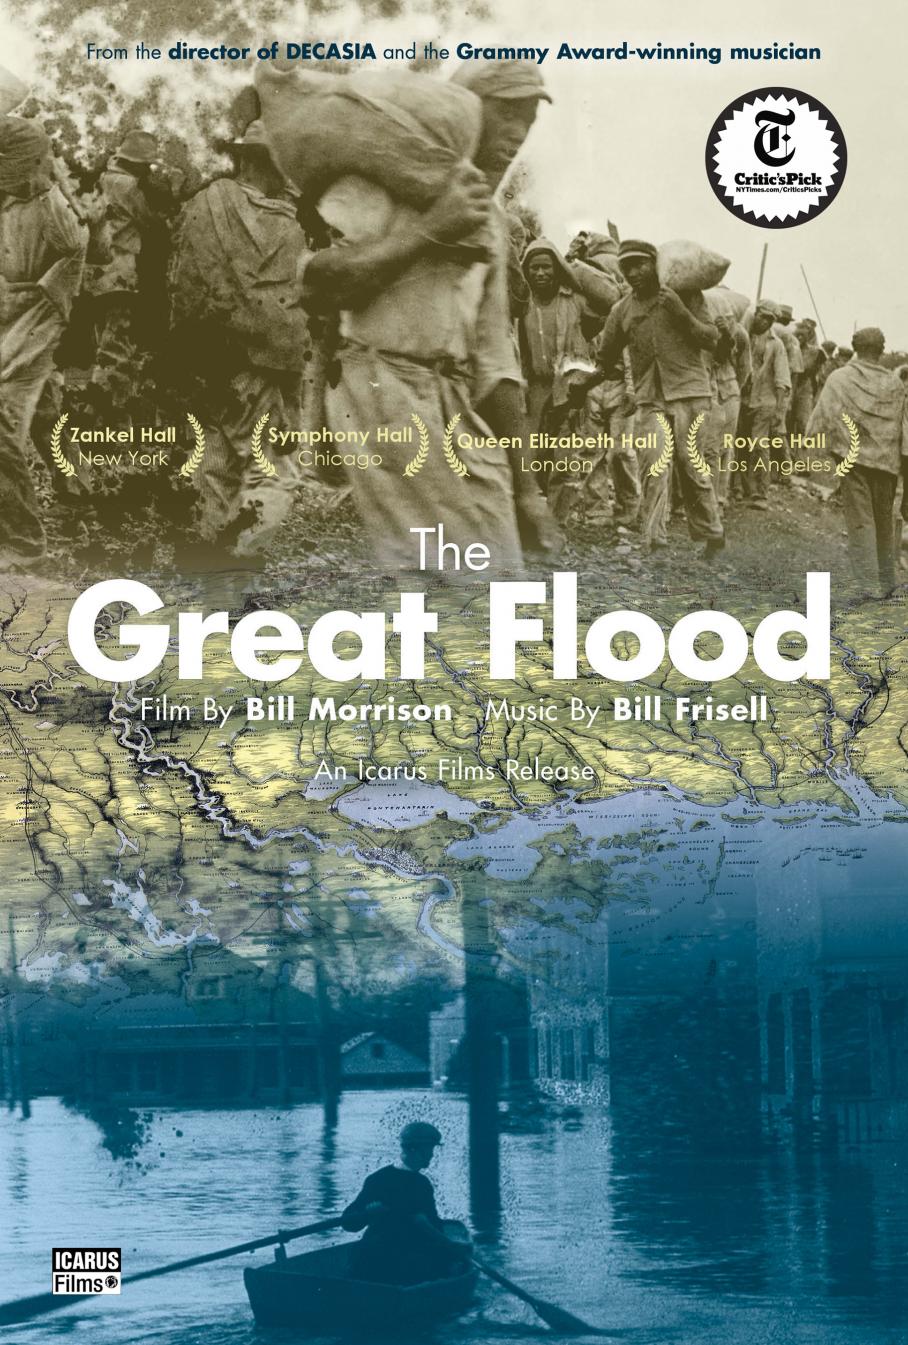 film poster for Bill Morrison's 'The Great Flood'